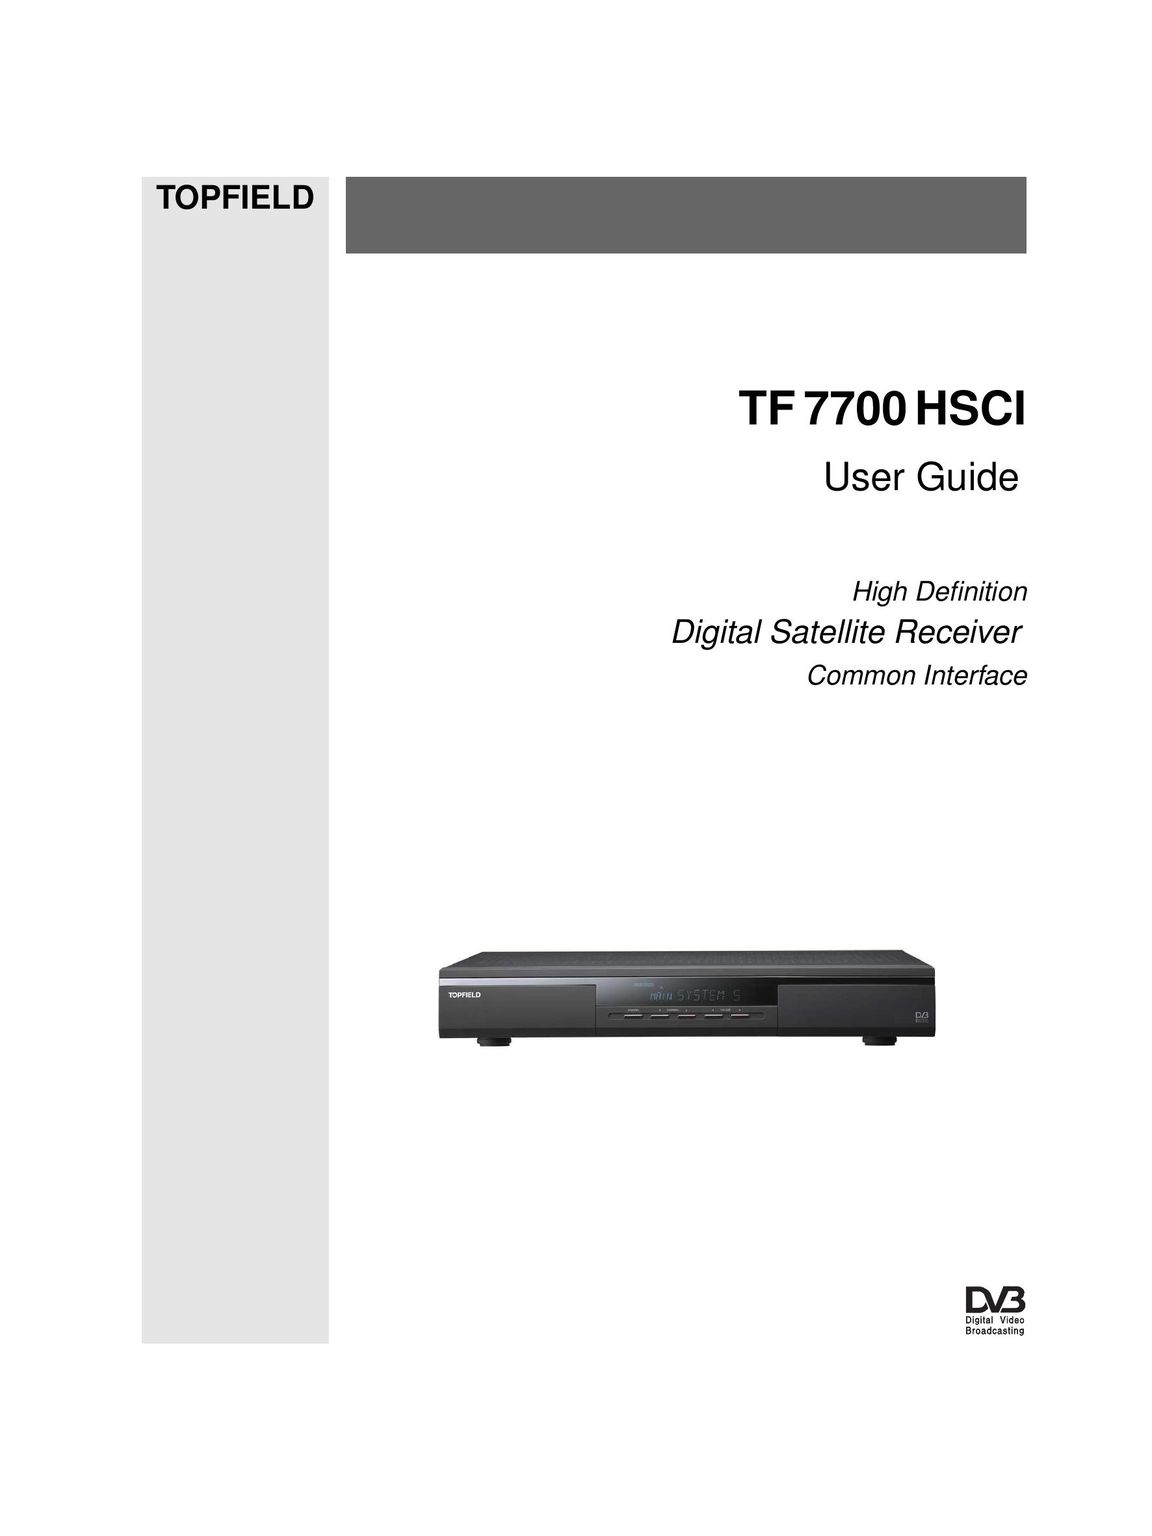 Topfield HV7700 HSCI Car Satellite Radio System User Manual